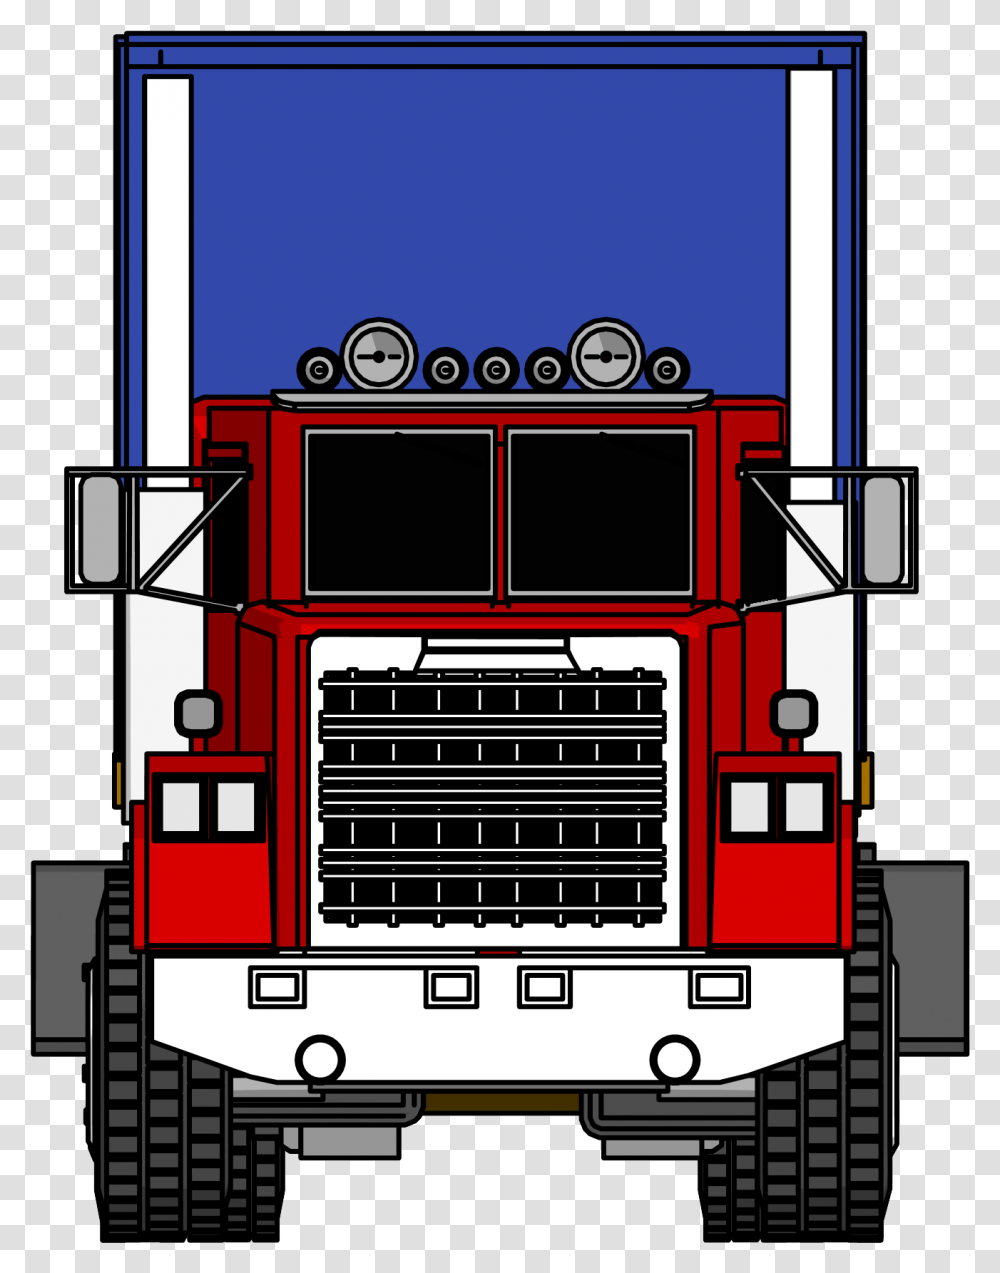 Industrial Truck Big Truck Clipart Image Front Cartoon Truck Front View, Vehicle, Transportation, Fire Truck, Scoreboard Transparent Png